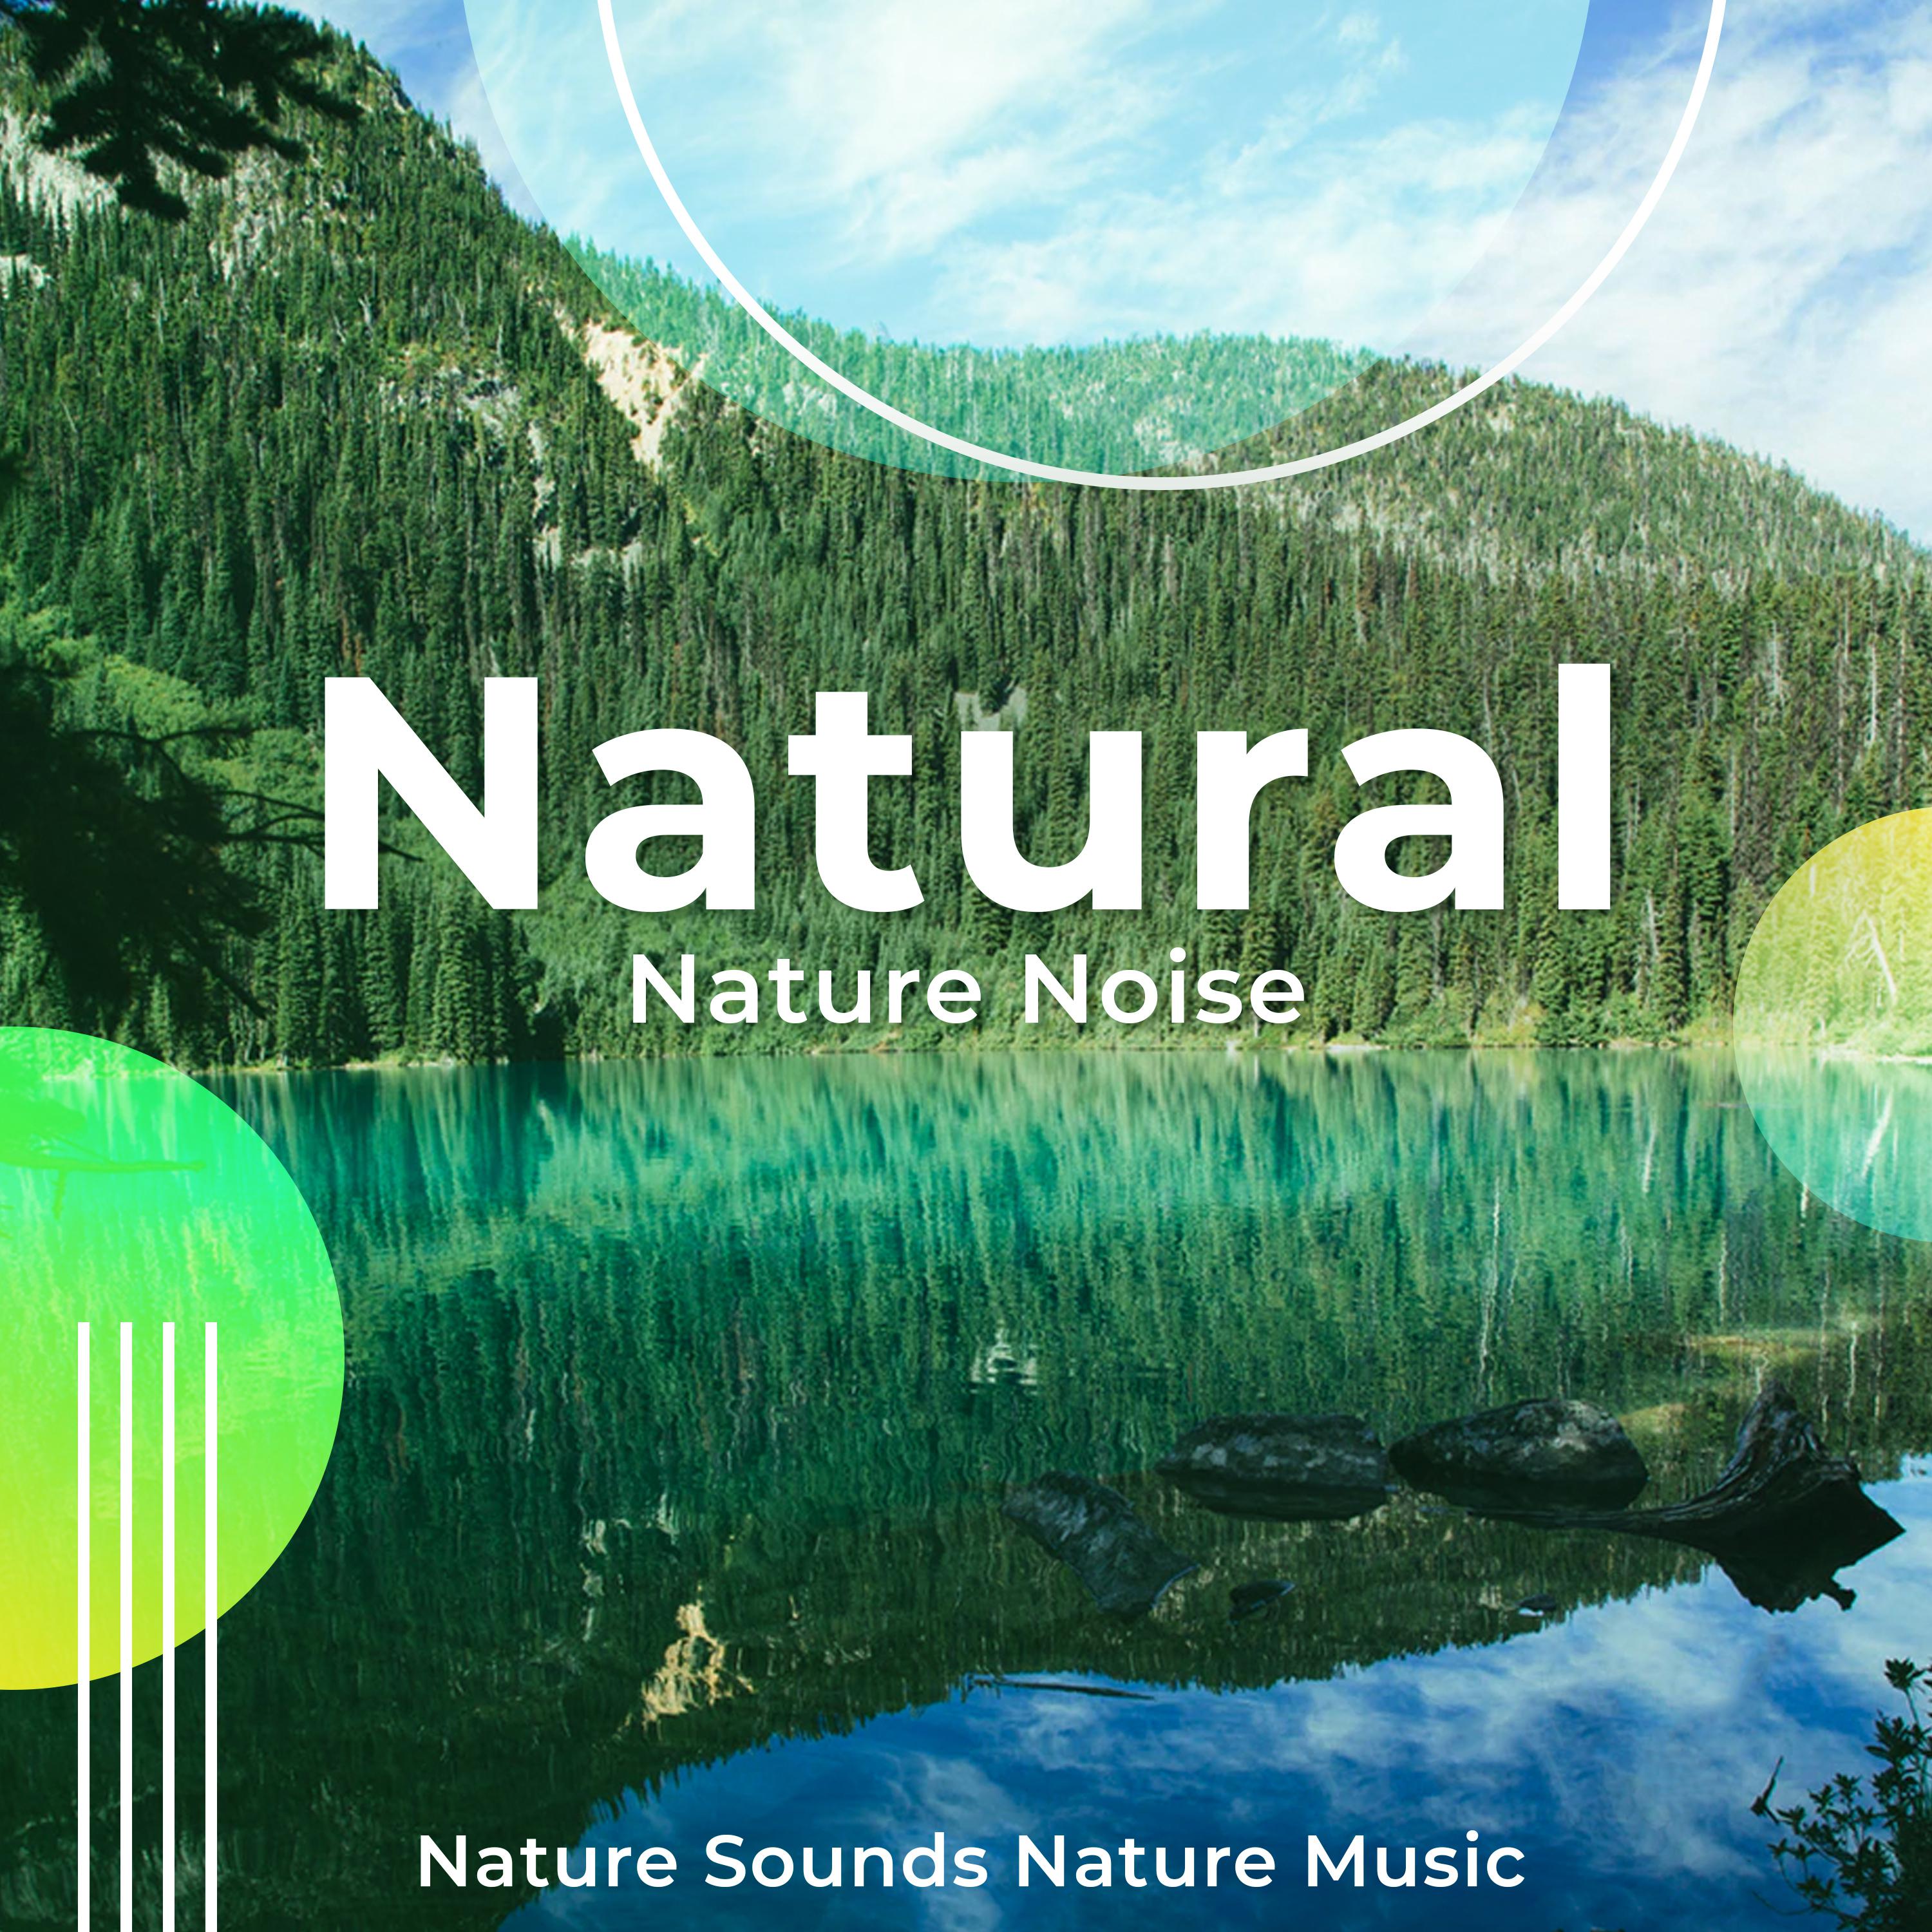 Natural Nature Noise